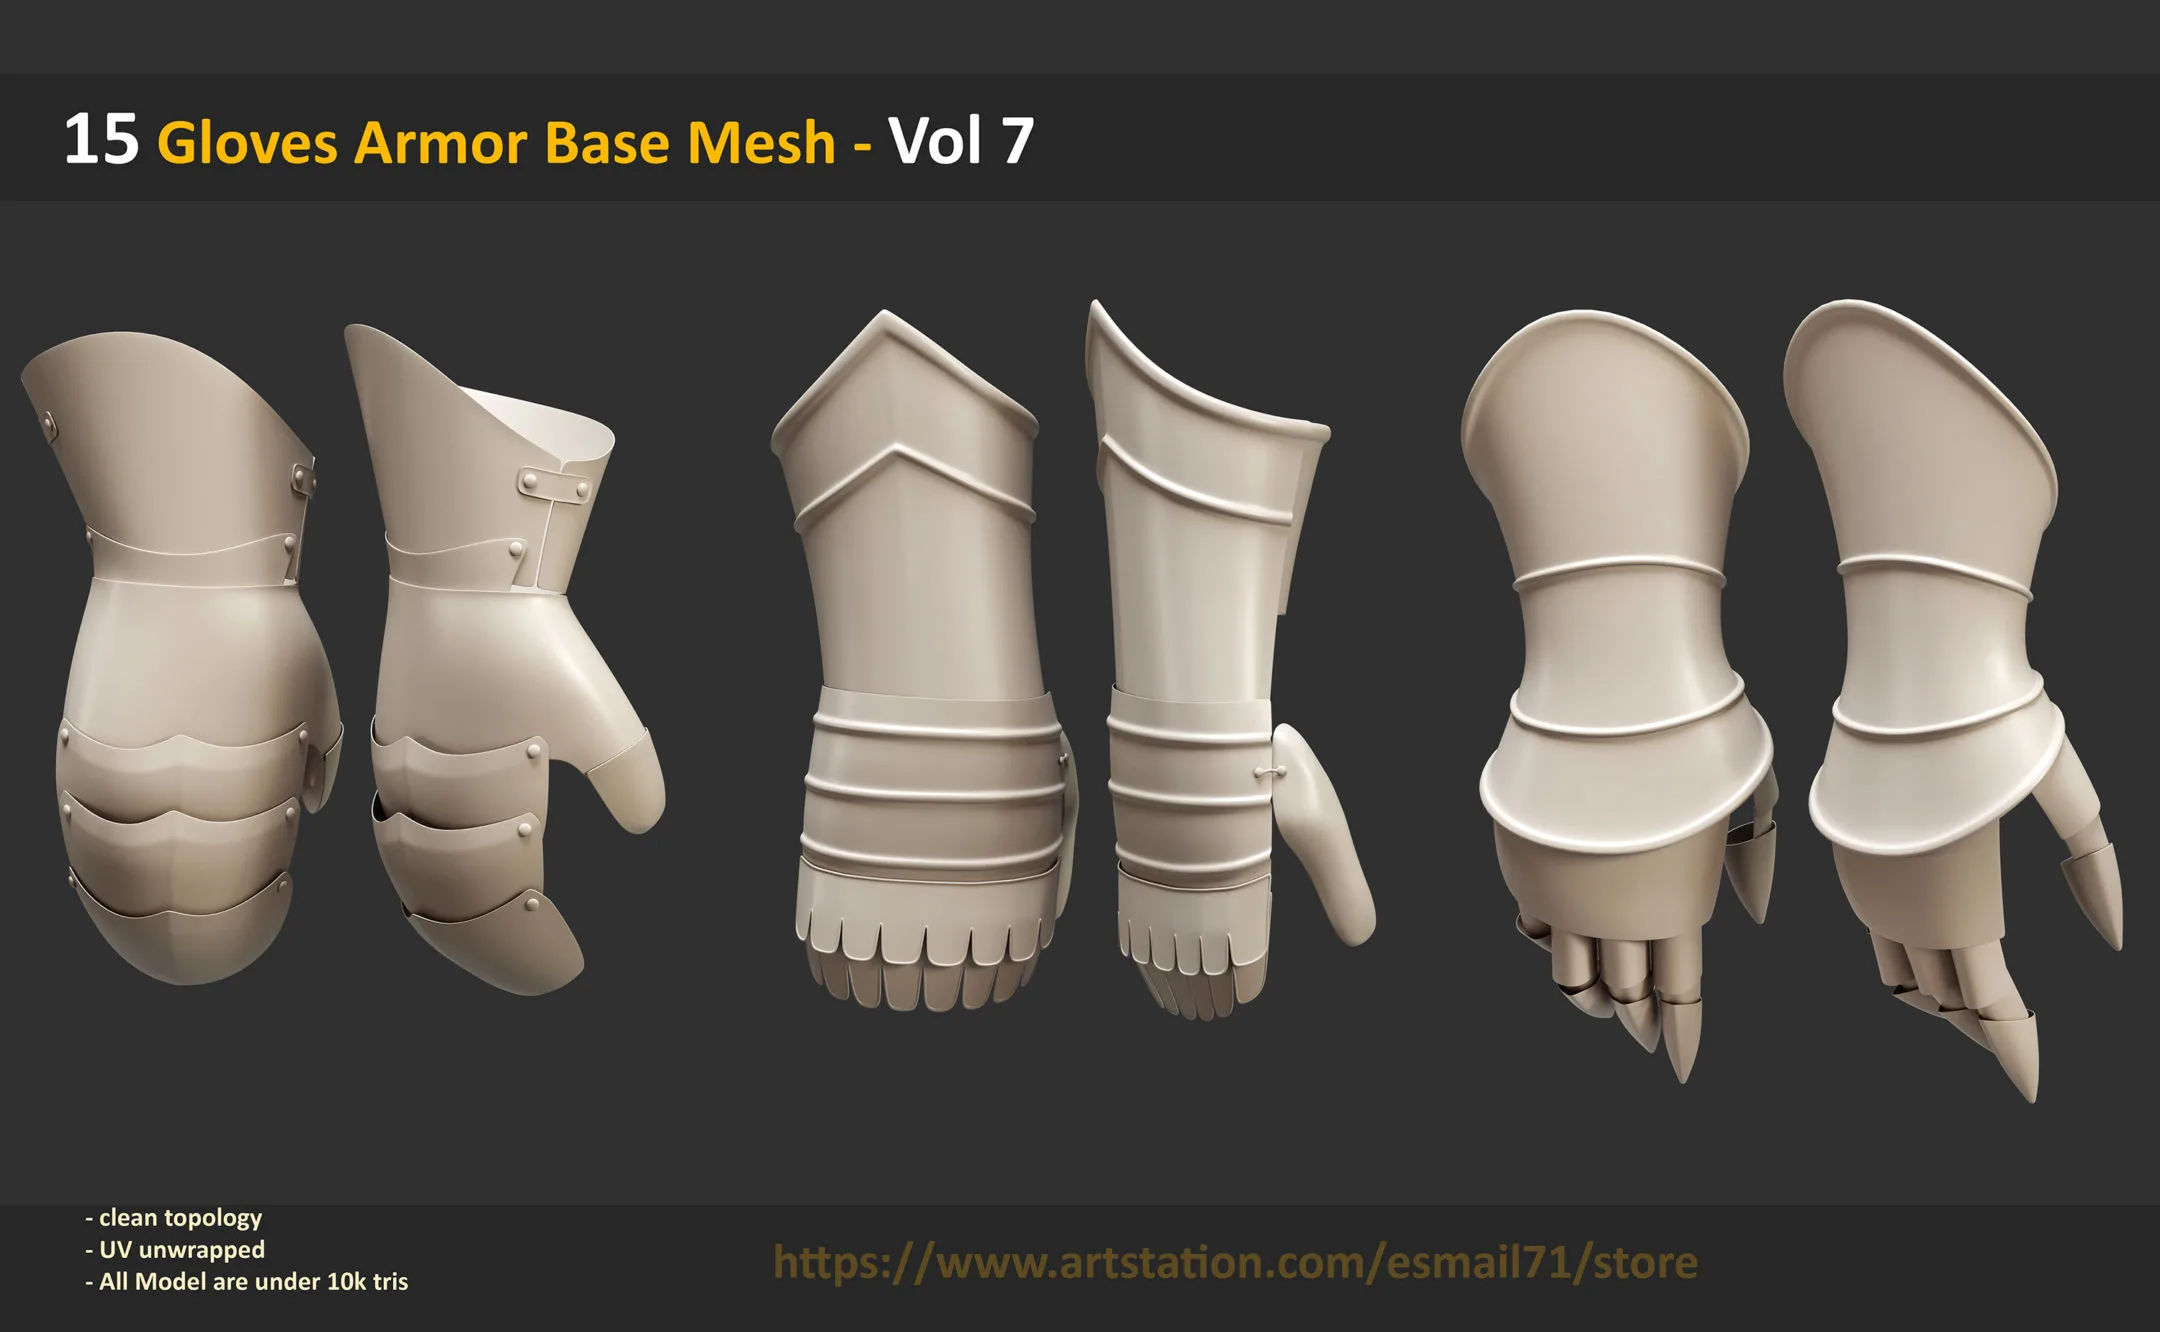 15 Gloves Armor Base Mesh - Vol 7